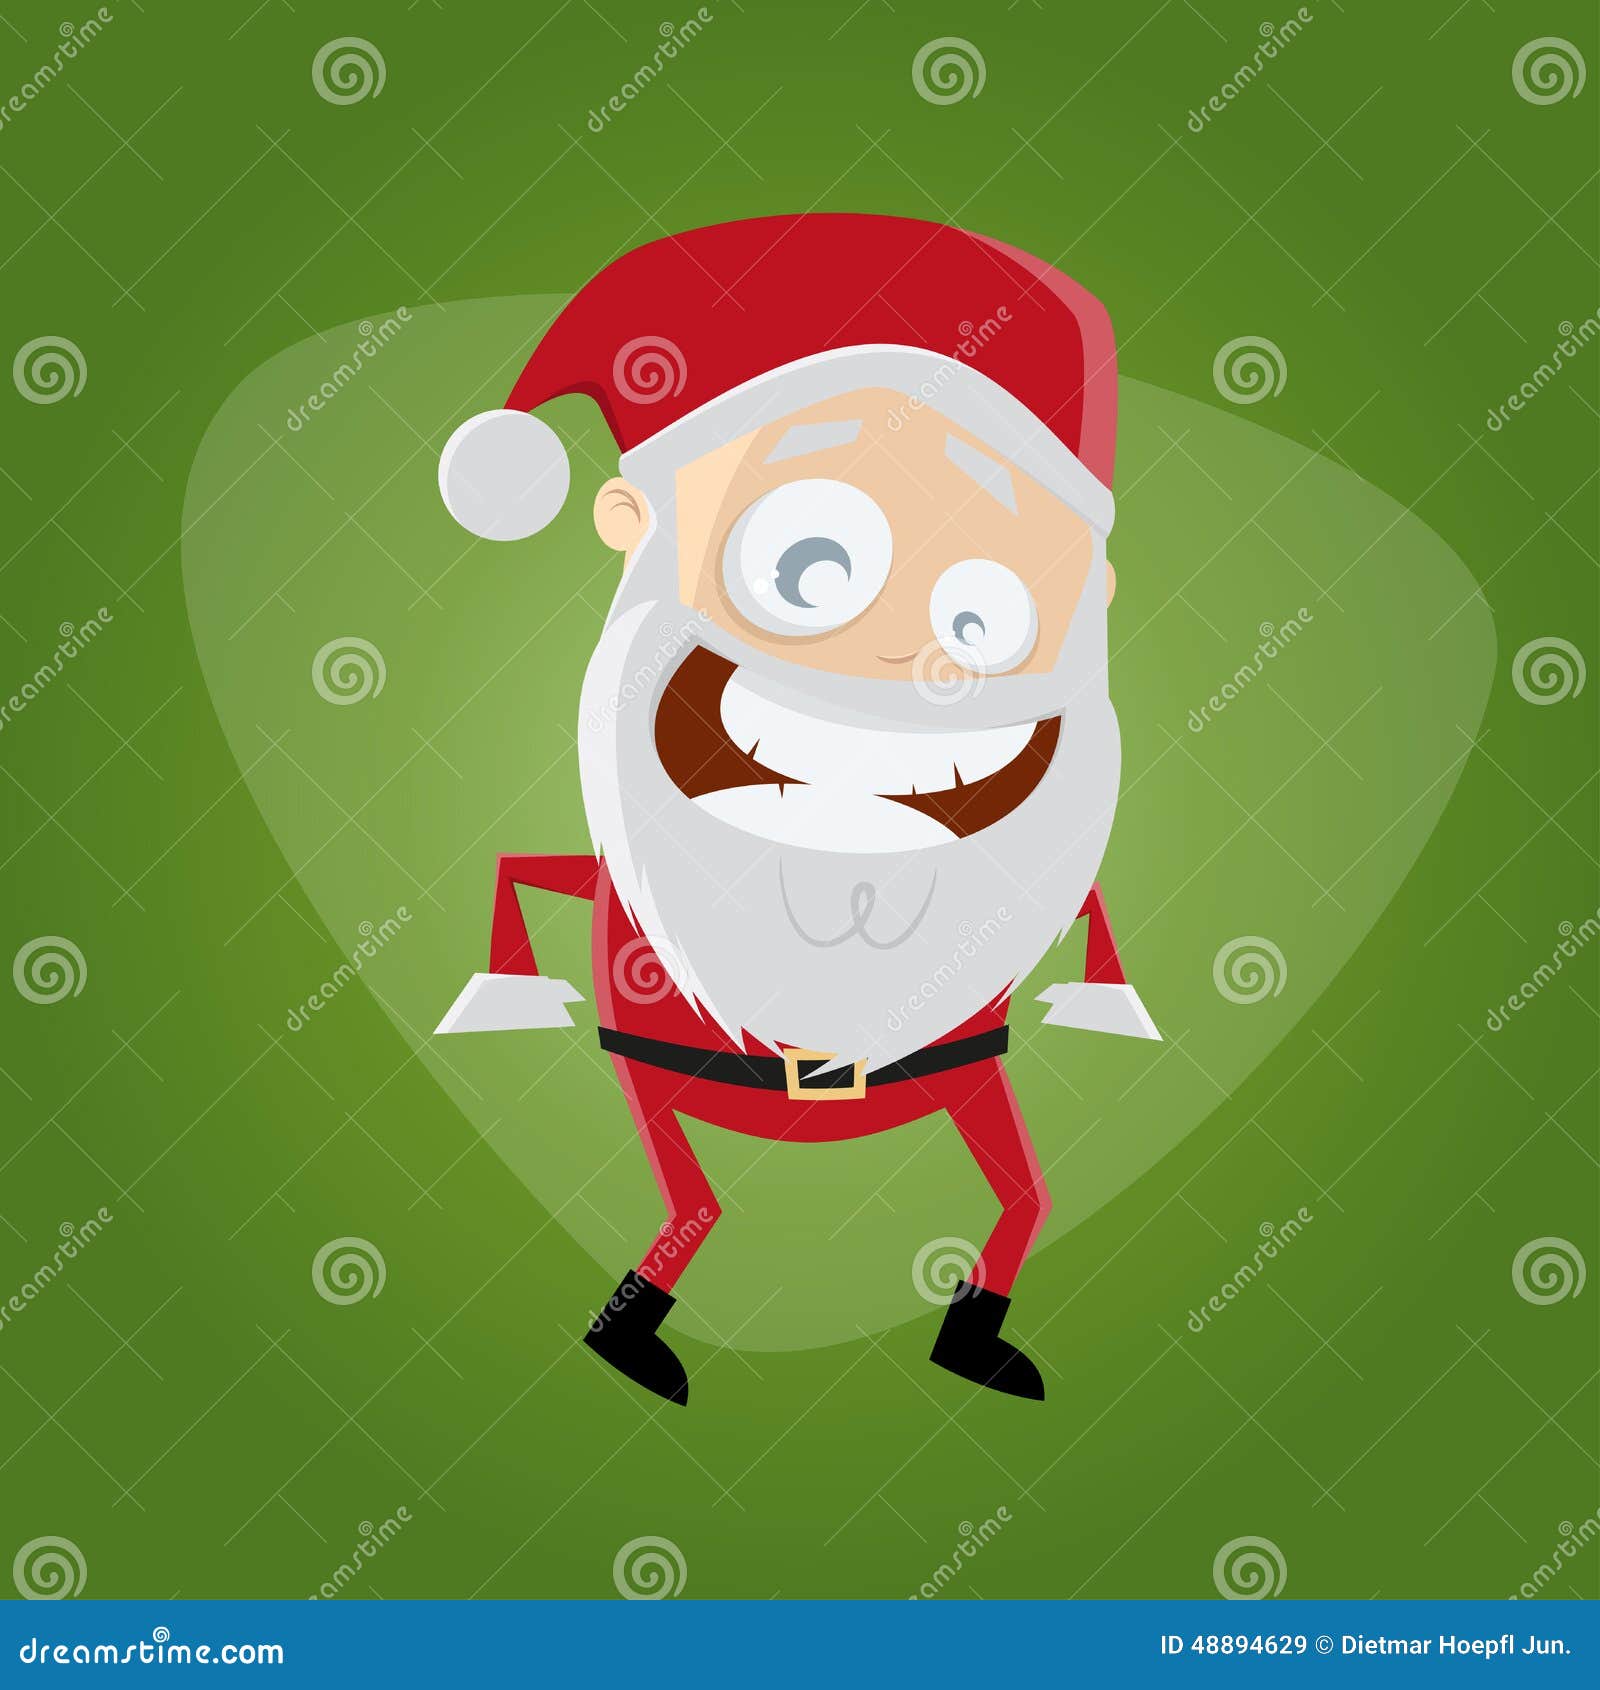 Funny Cartoon Santa Claus Stock Vector Image 48894629